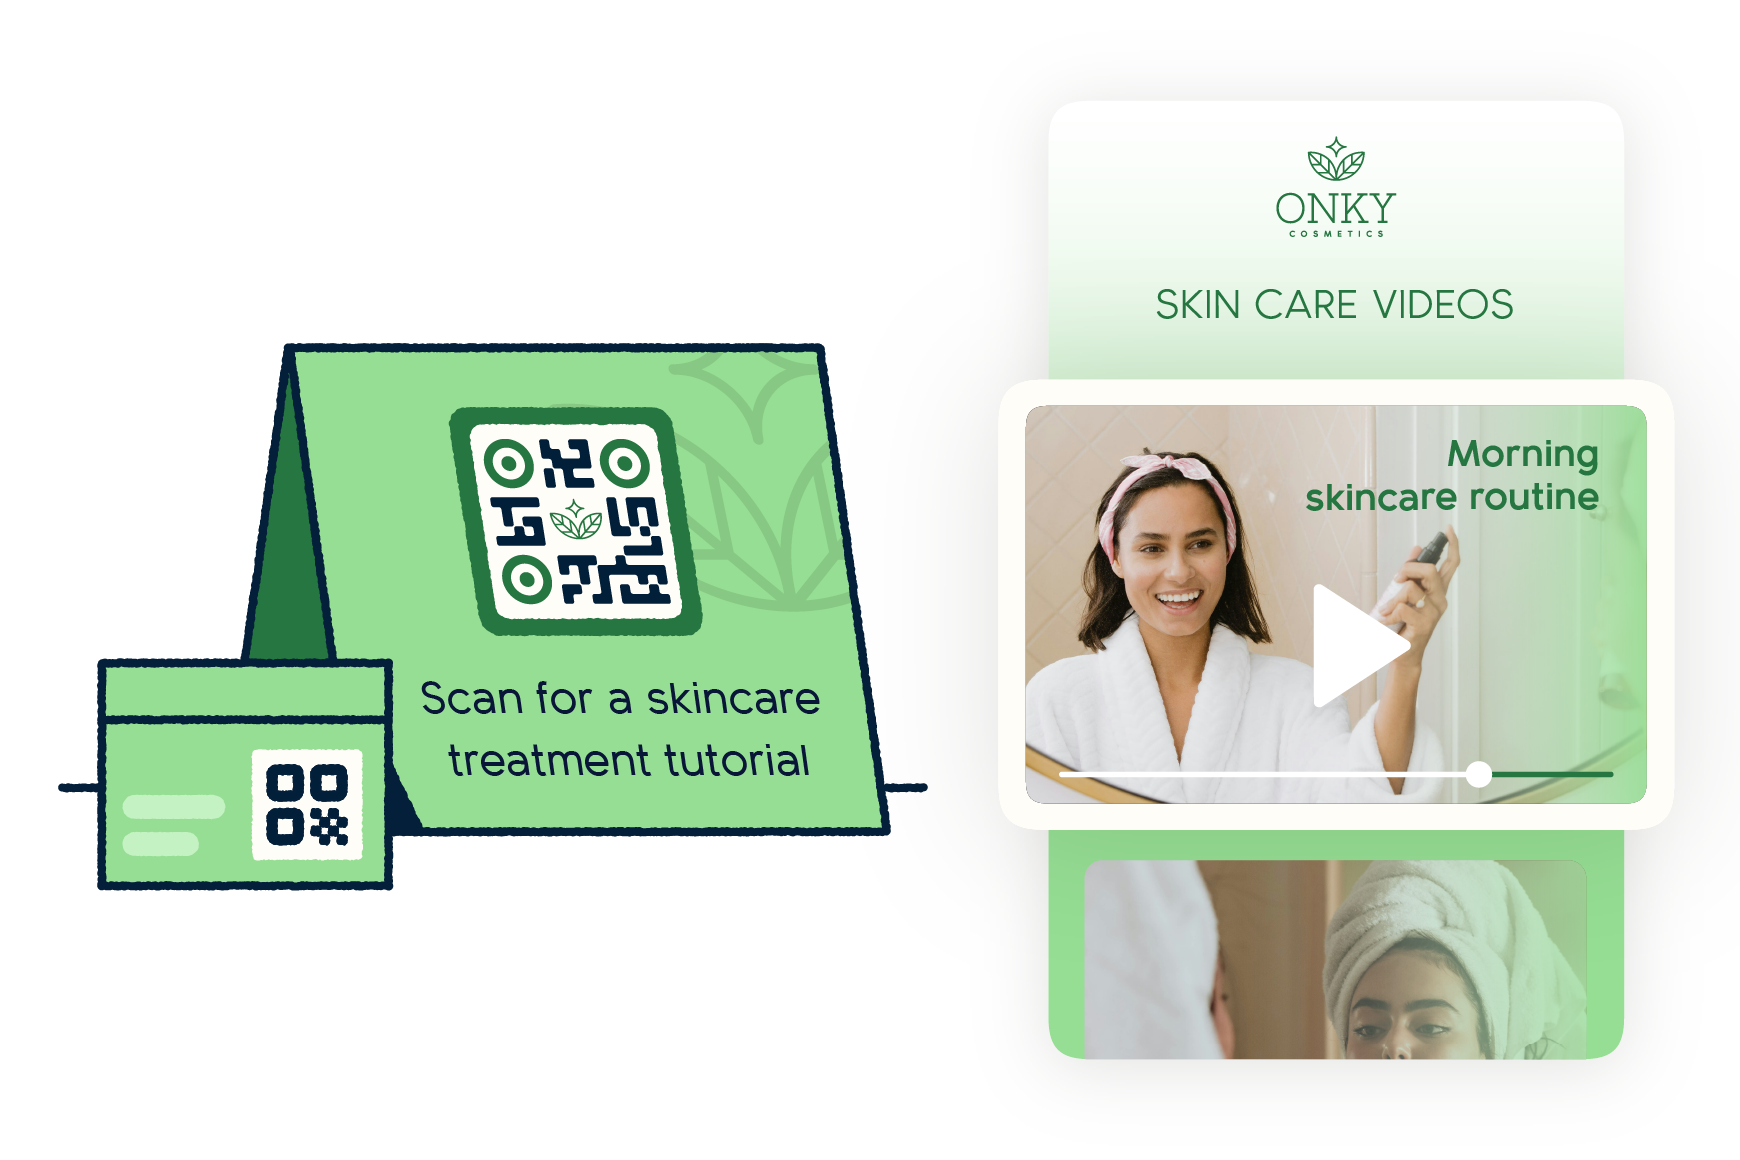 QR Code for skincare treatment tutorial